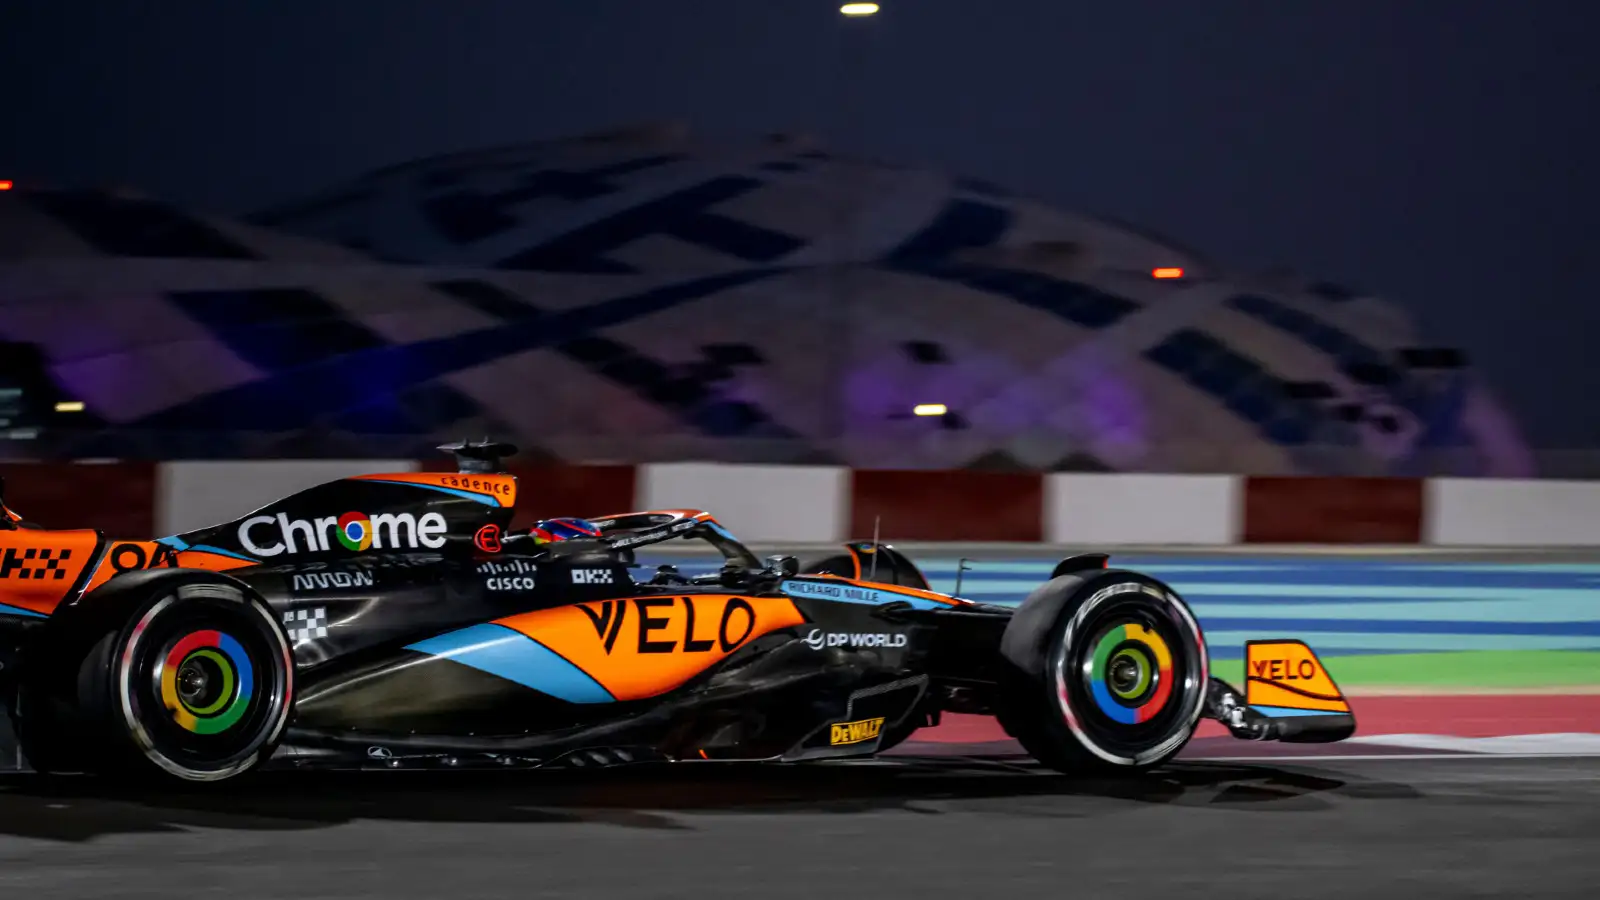 McLaren's Oscar Piastri racing in the 2023 Qatar Grand Prix.